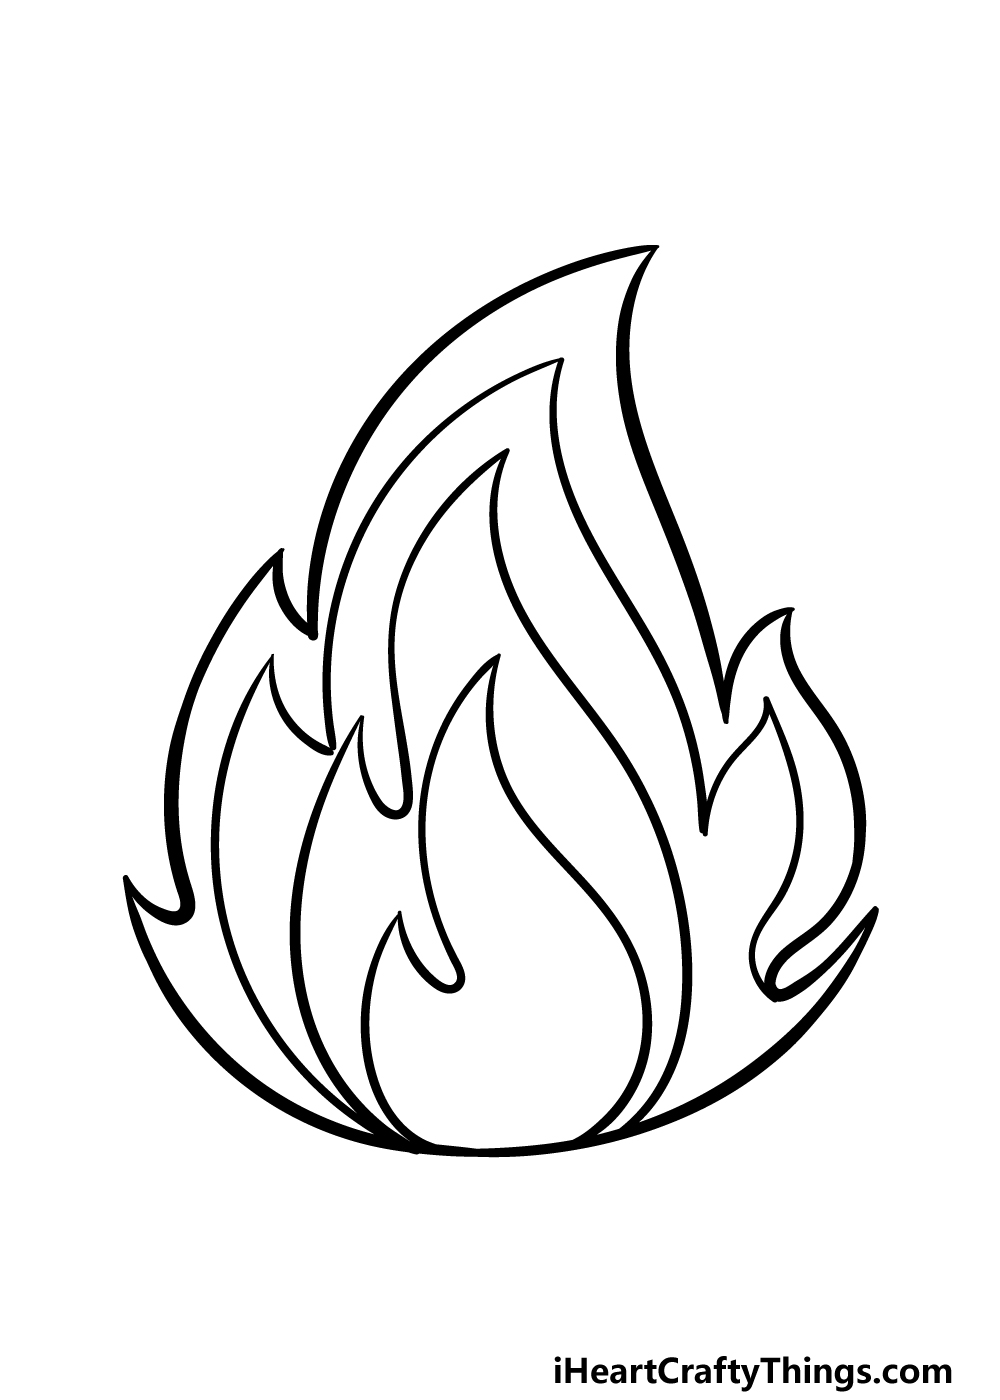 how to draw a cartoon flame step 5